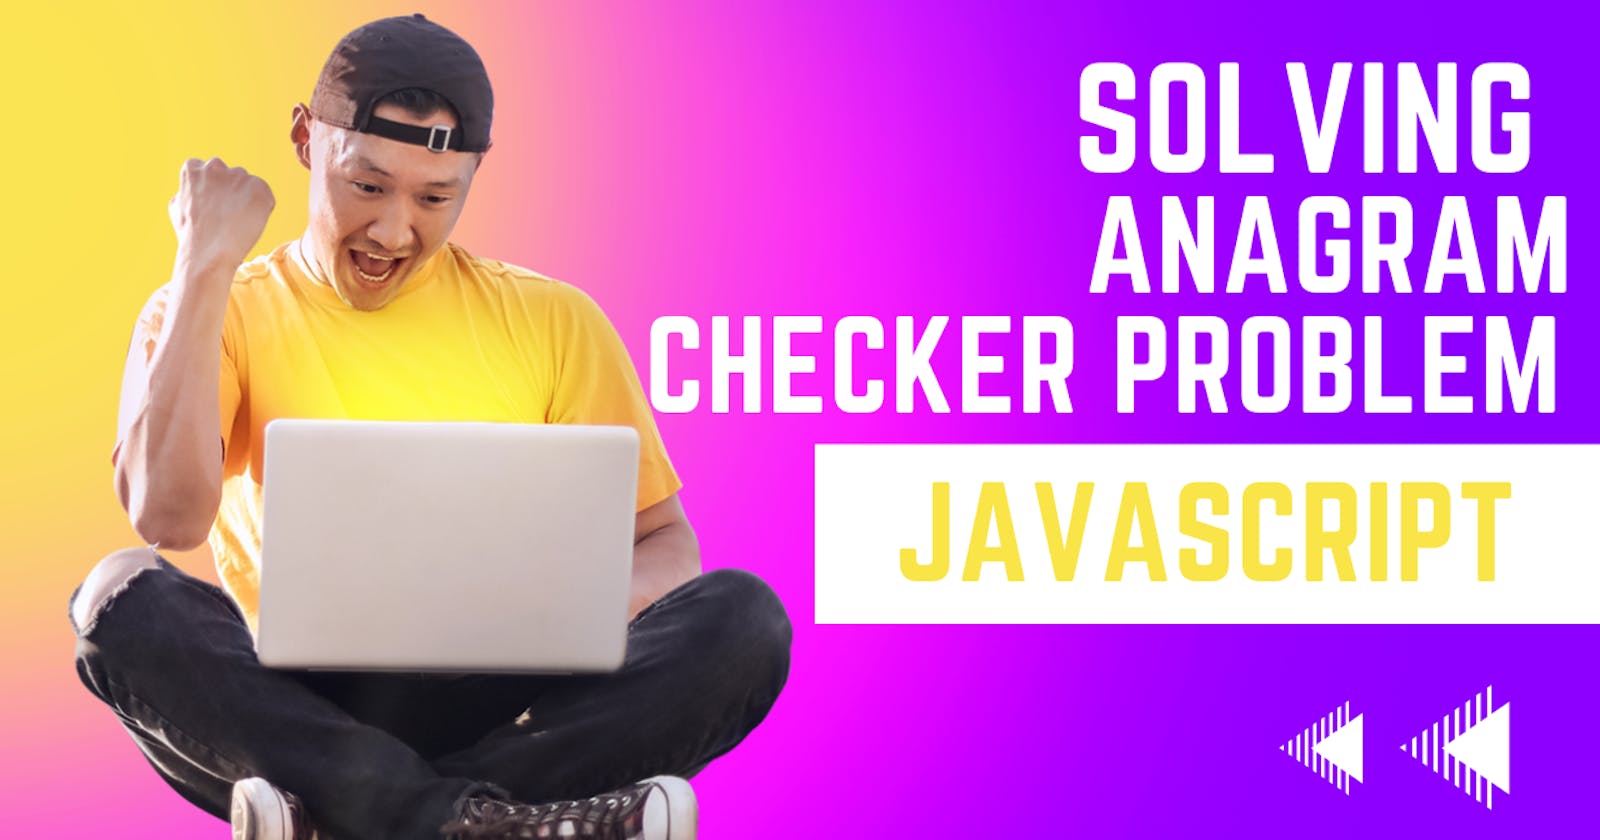 Solving Valid Anagrams Checker Problem in JavaScript